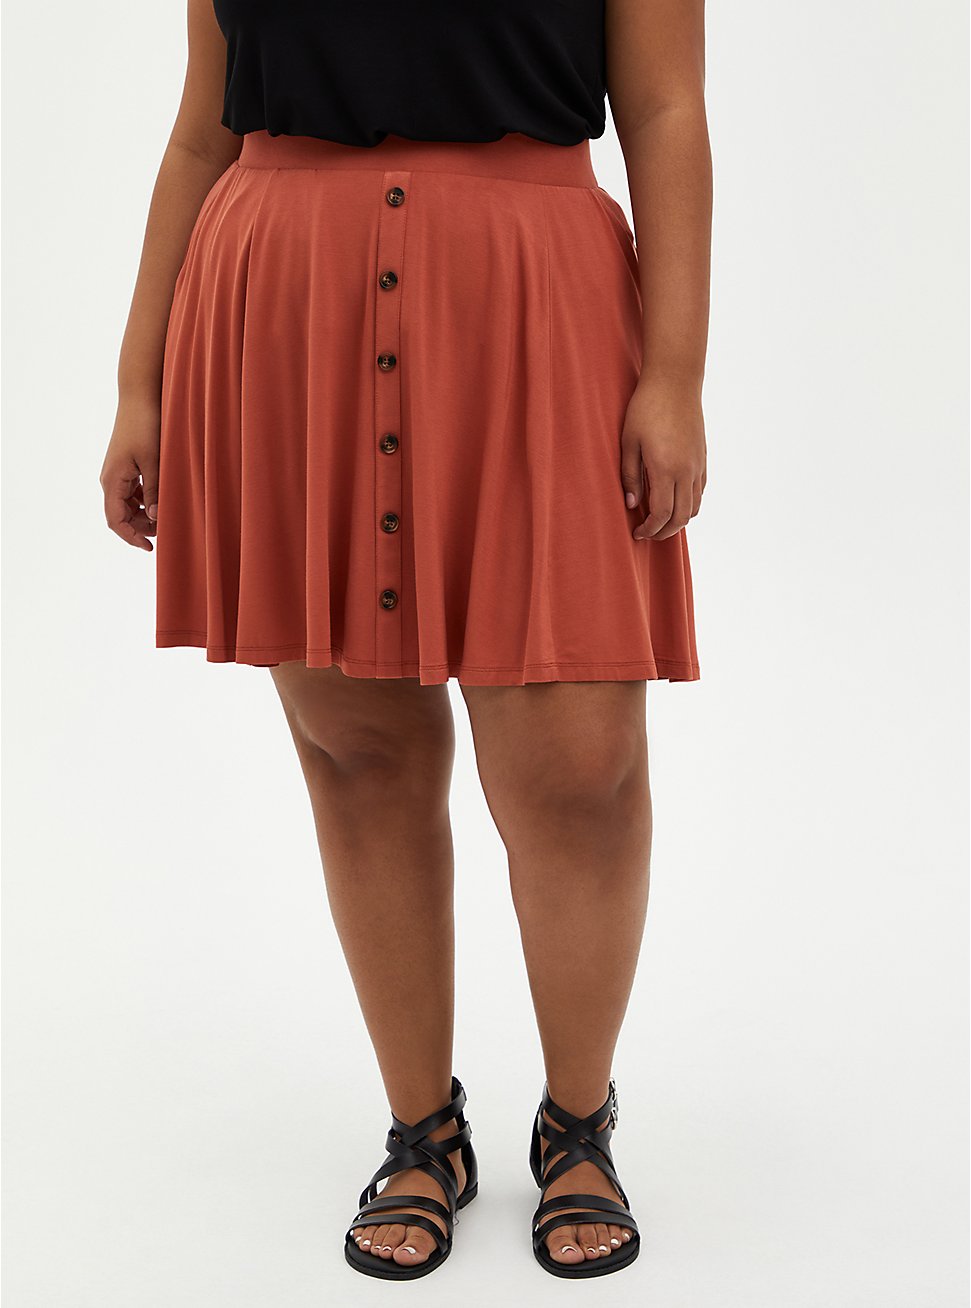 Auburn Super Soft Button Front Mini Skirt, , hi-res